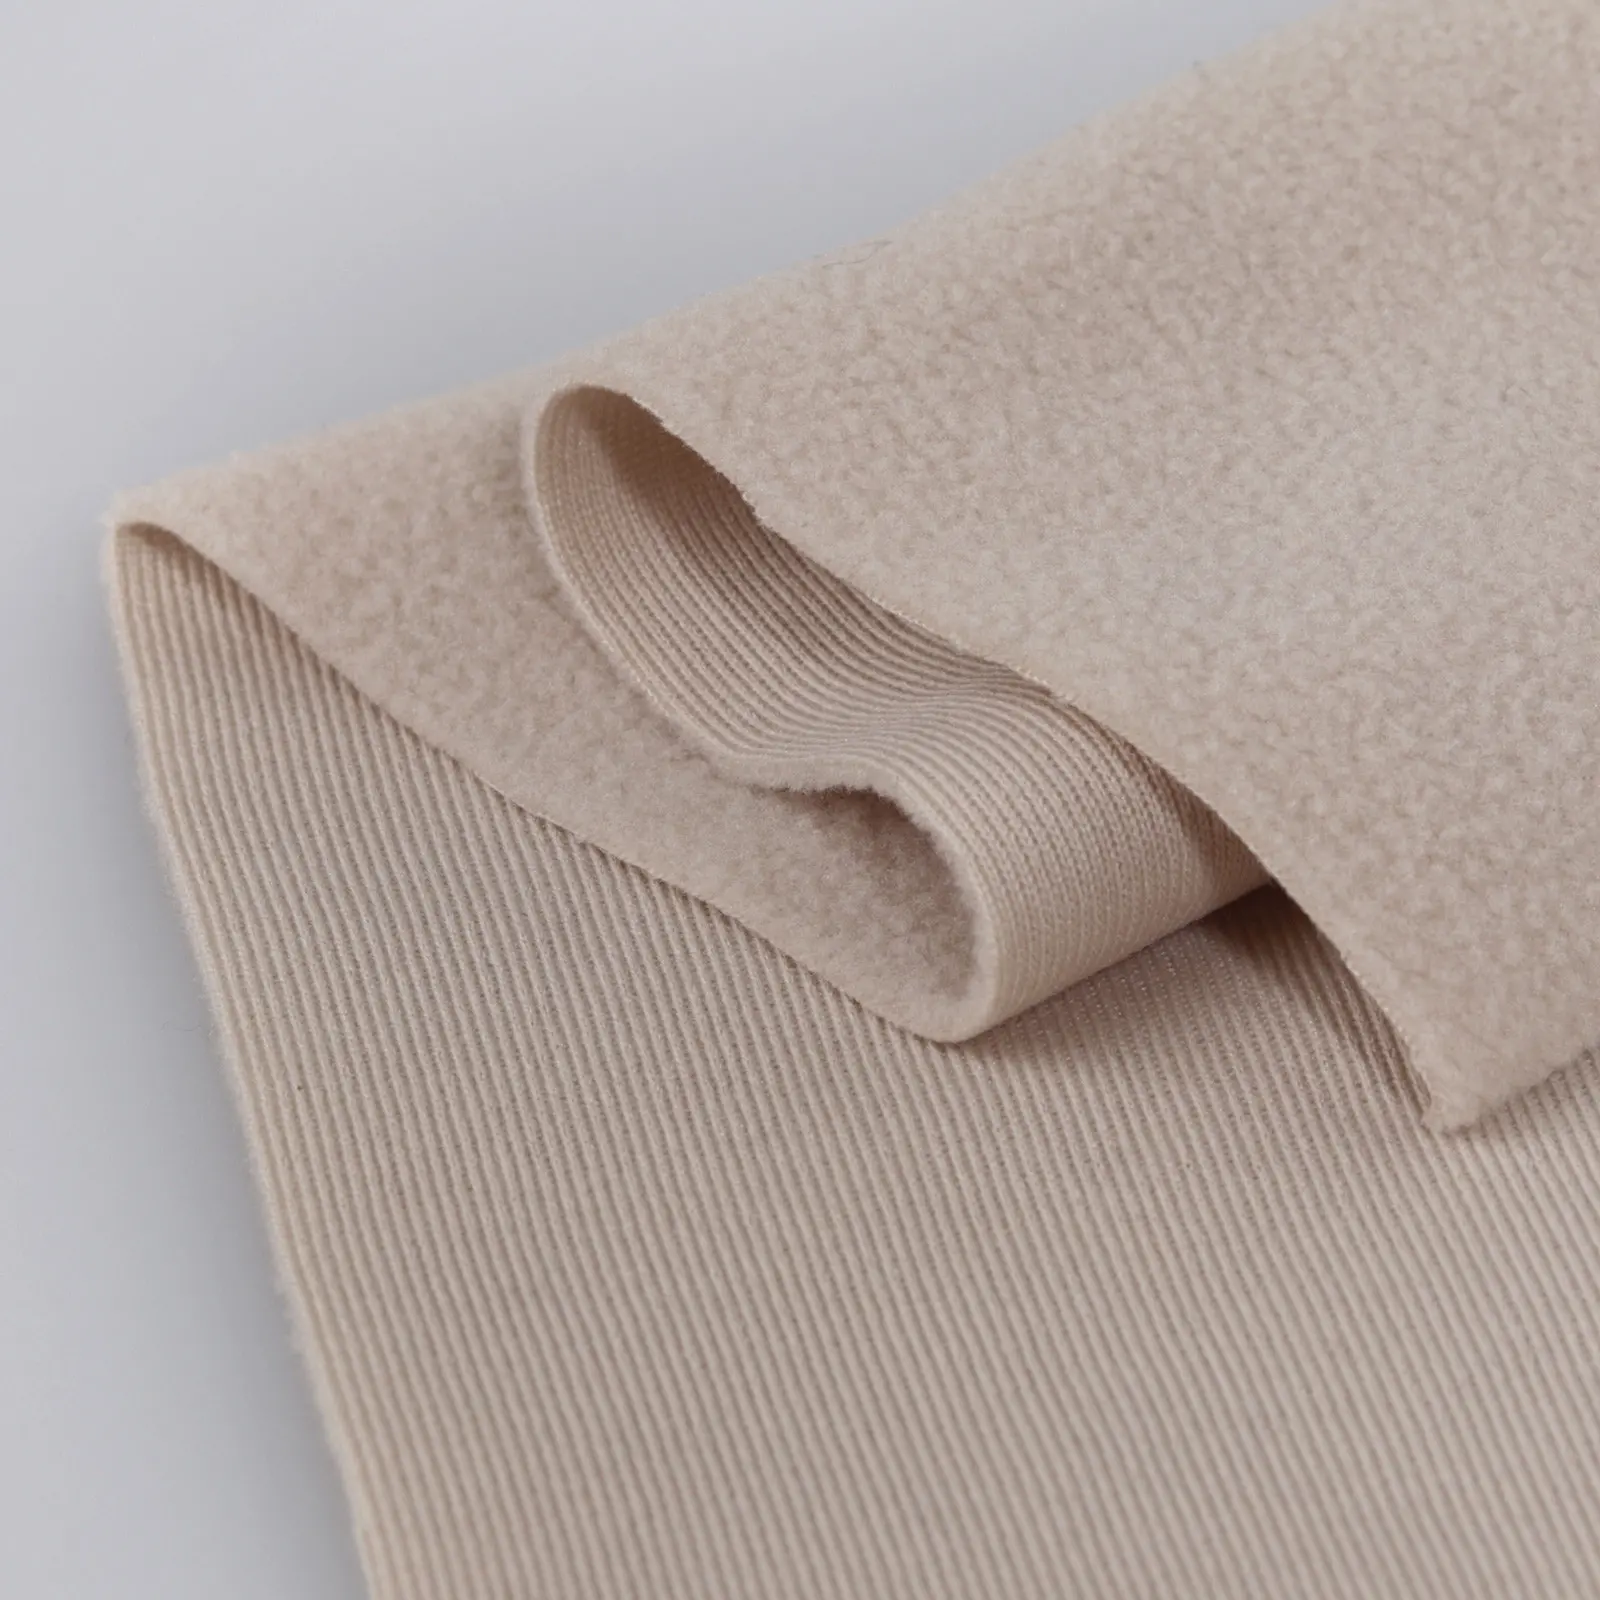 White- One sided Fleece - 100% Polyester Fleece